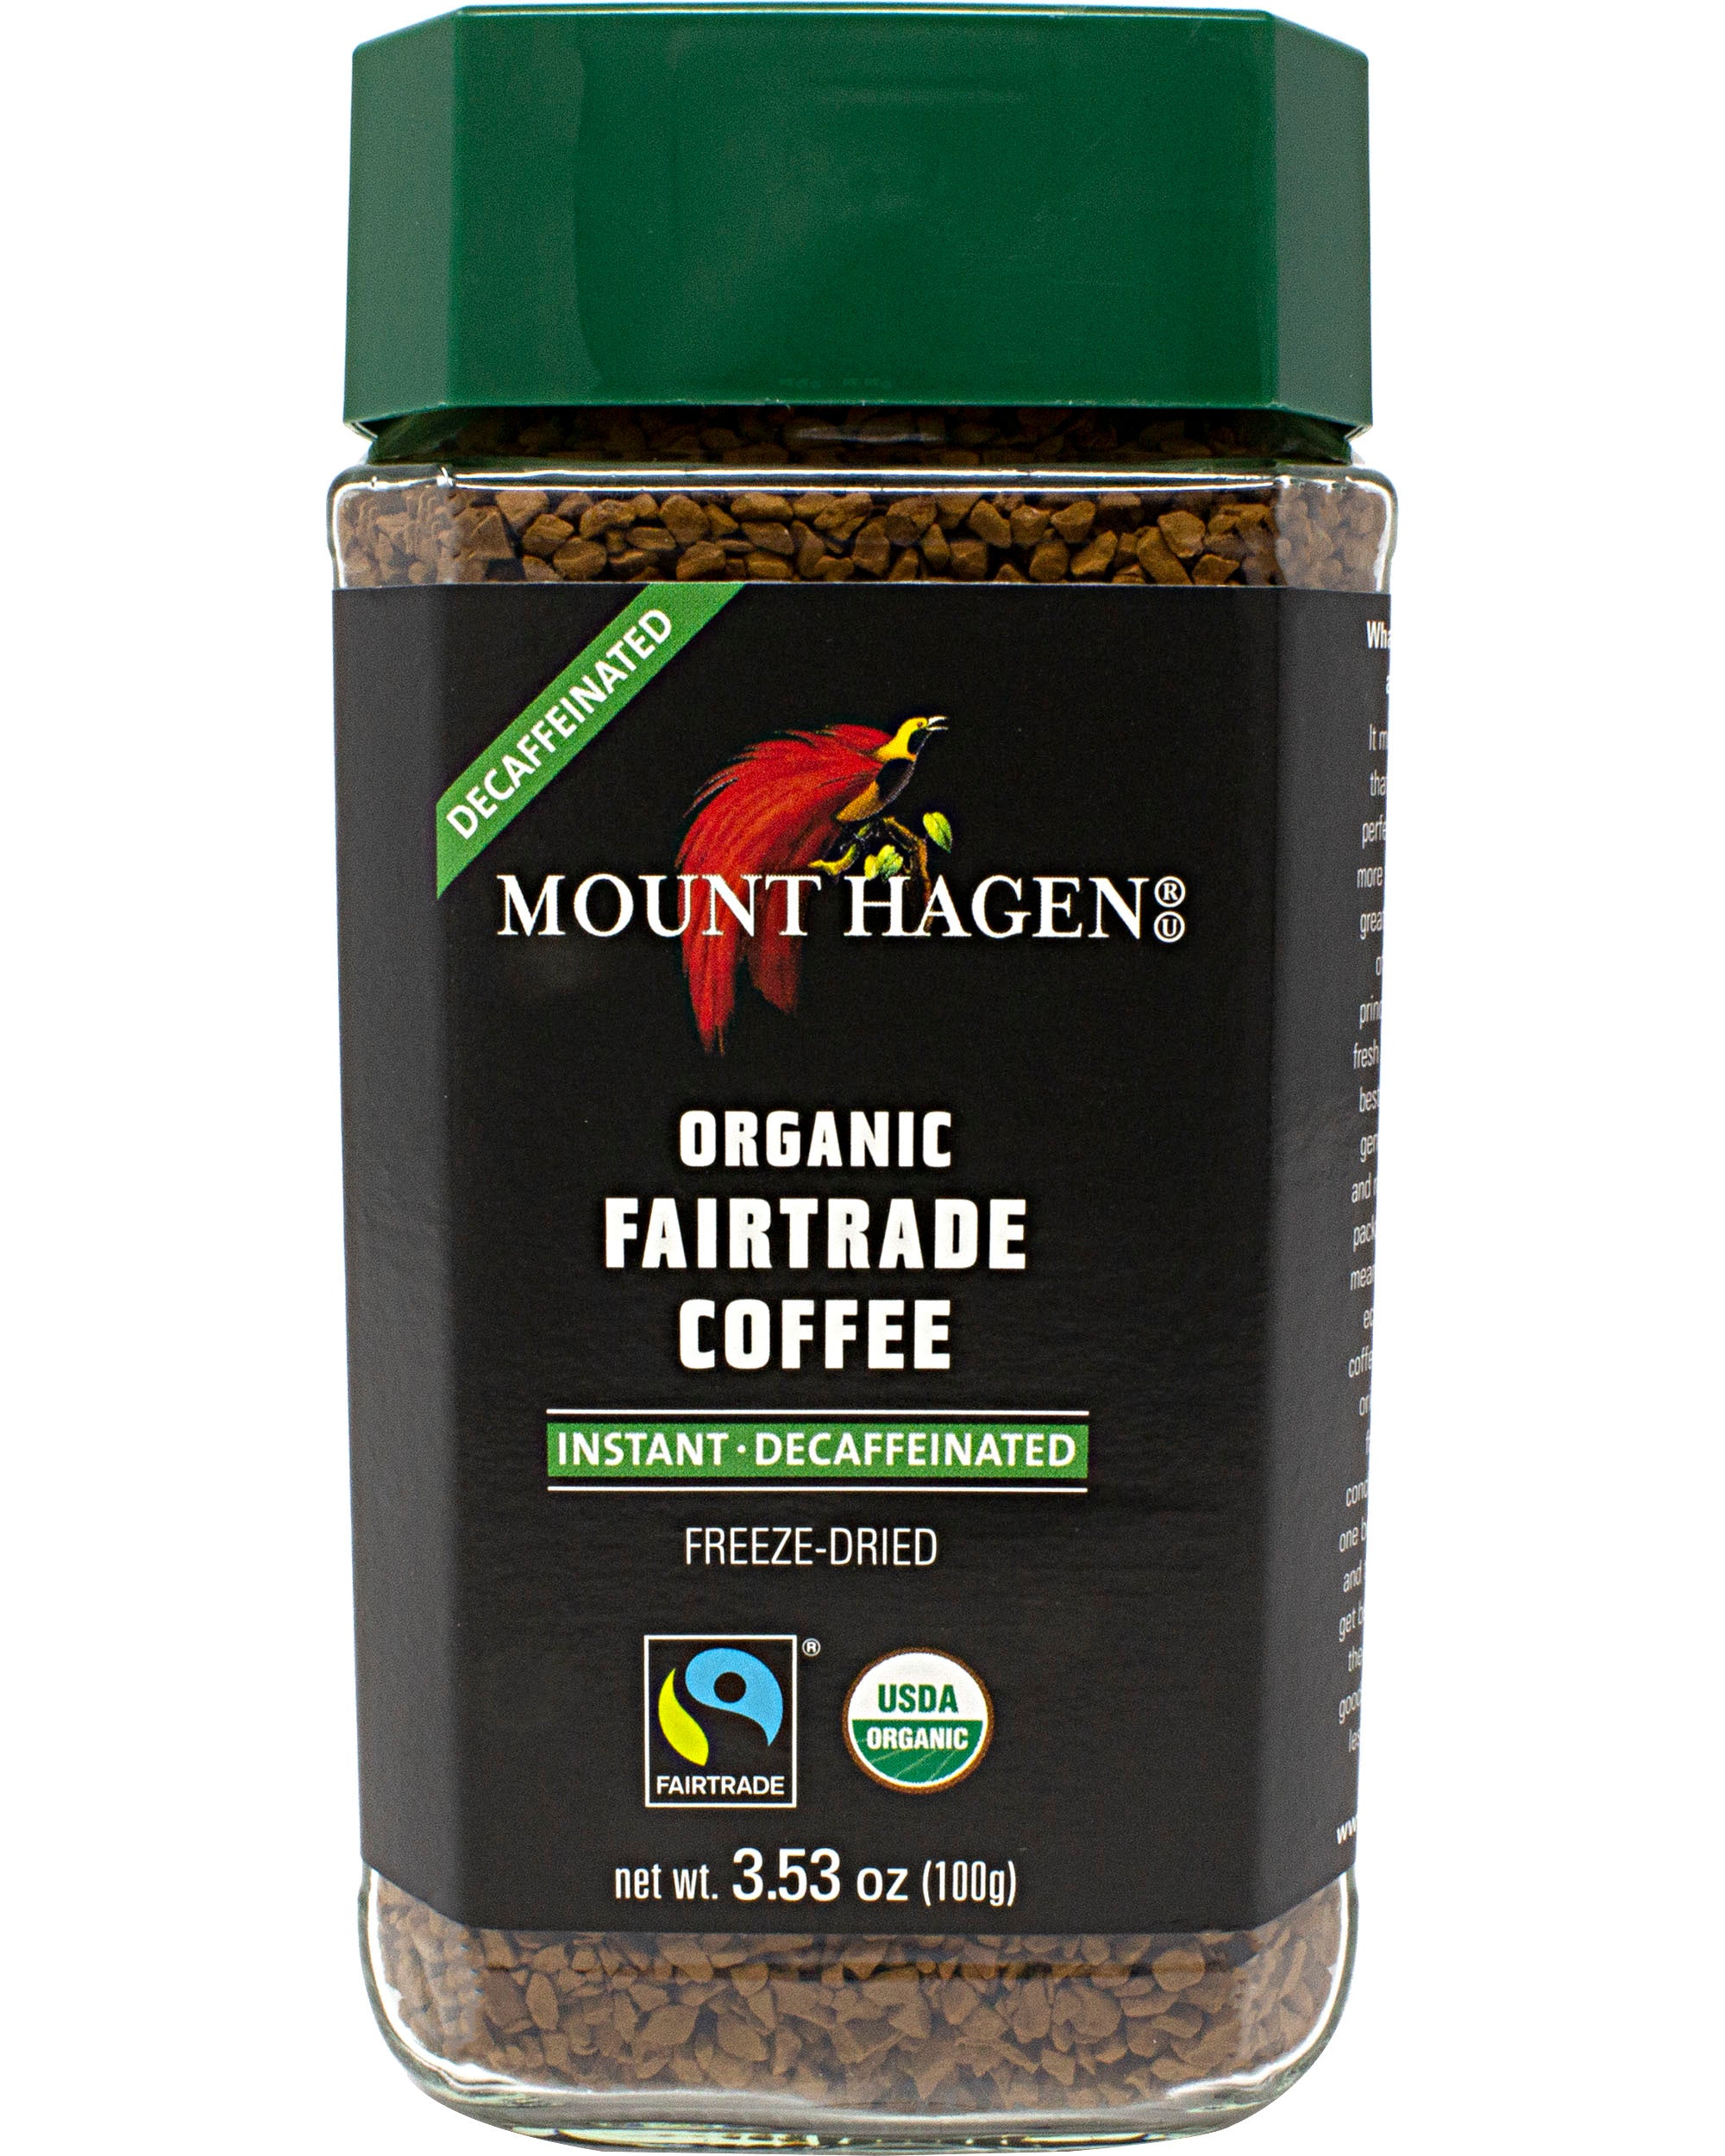 mount hagen instant coffee caffeine content